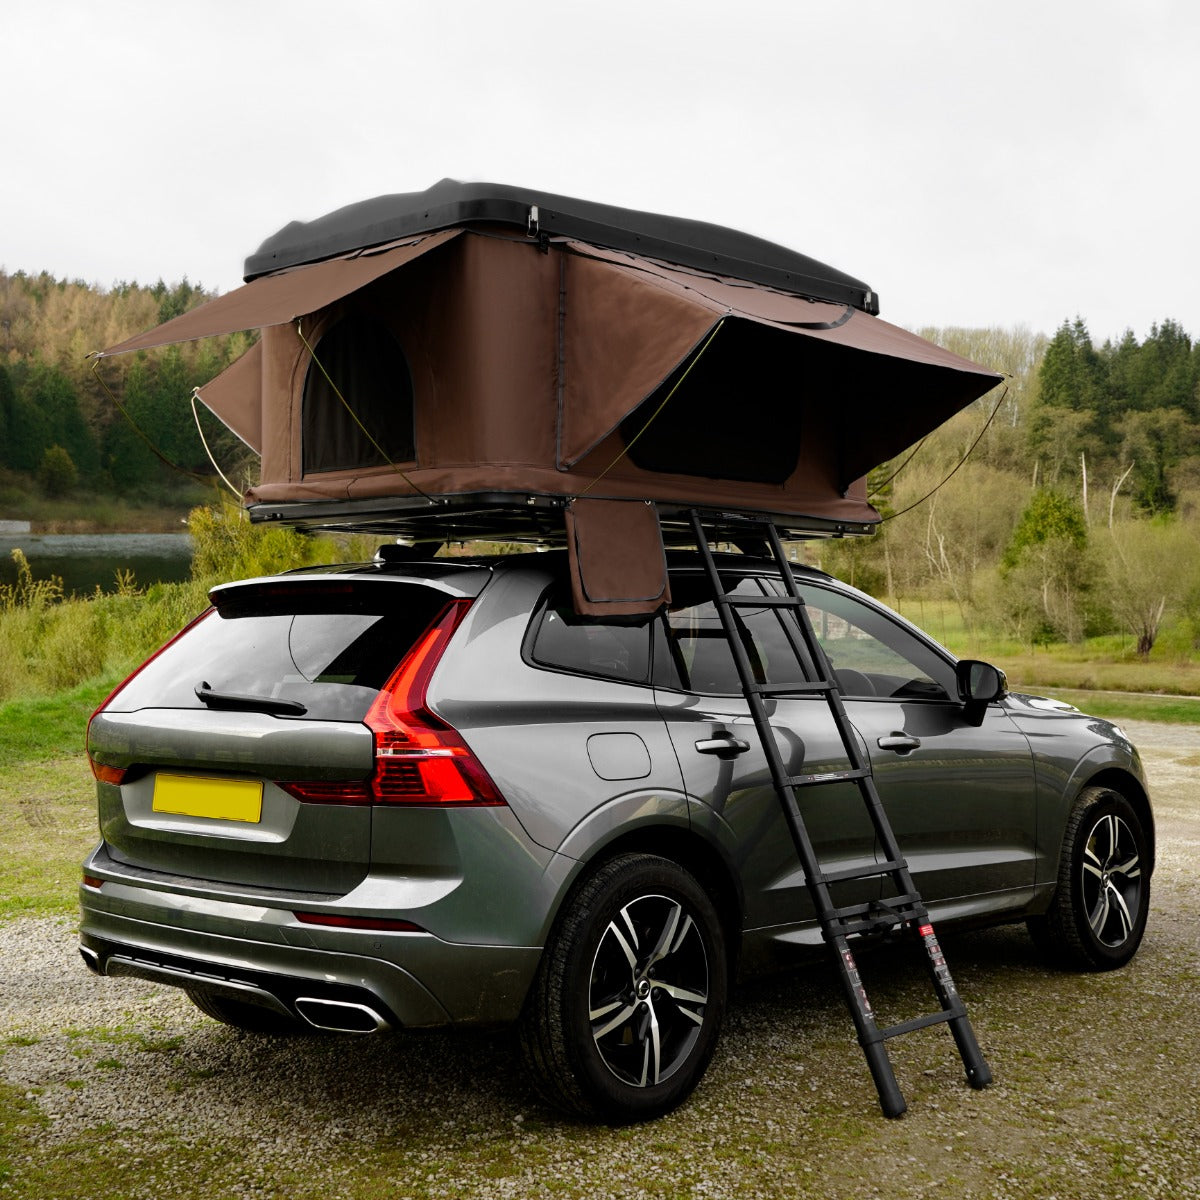 Car Roof Tent - Brown